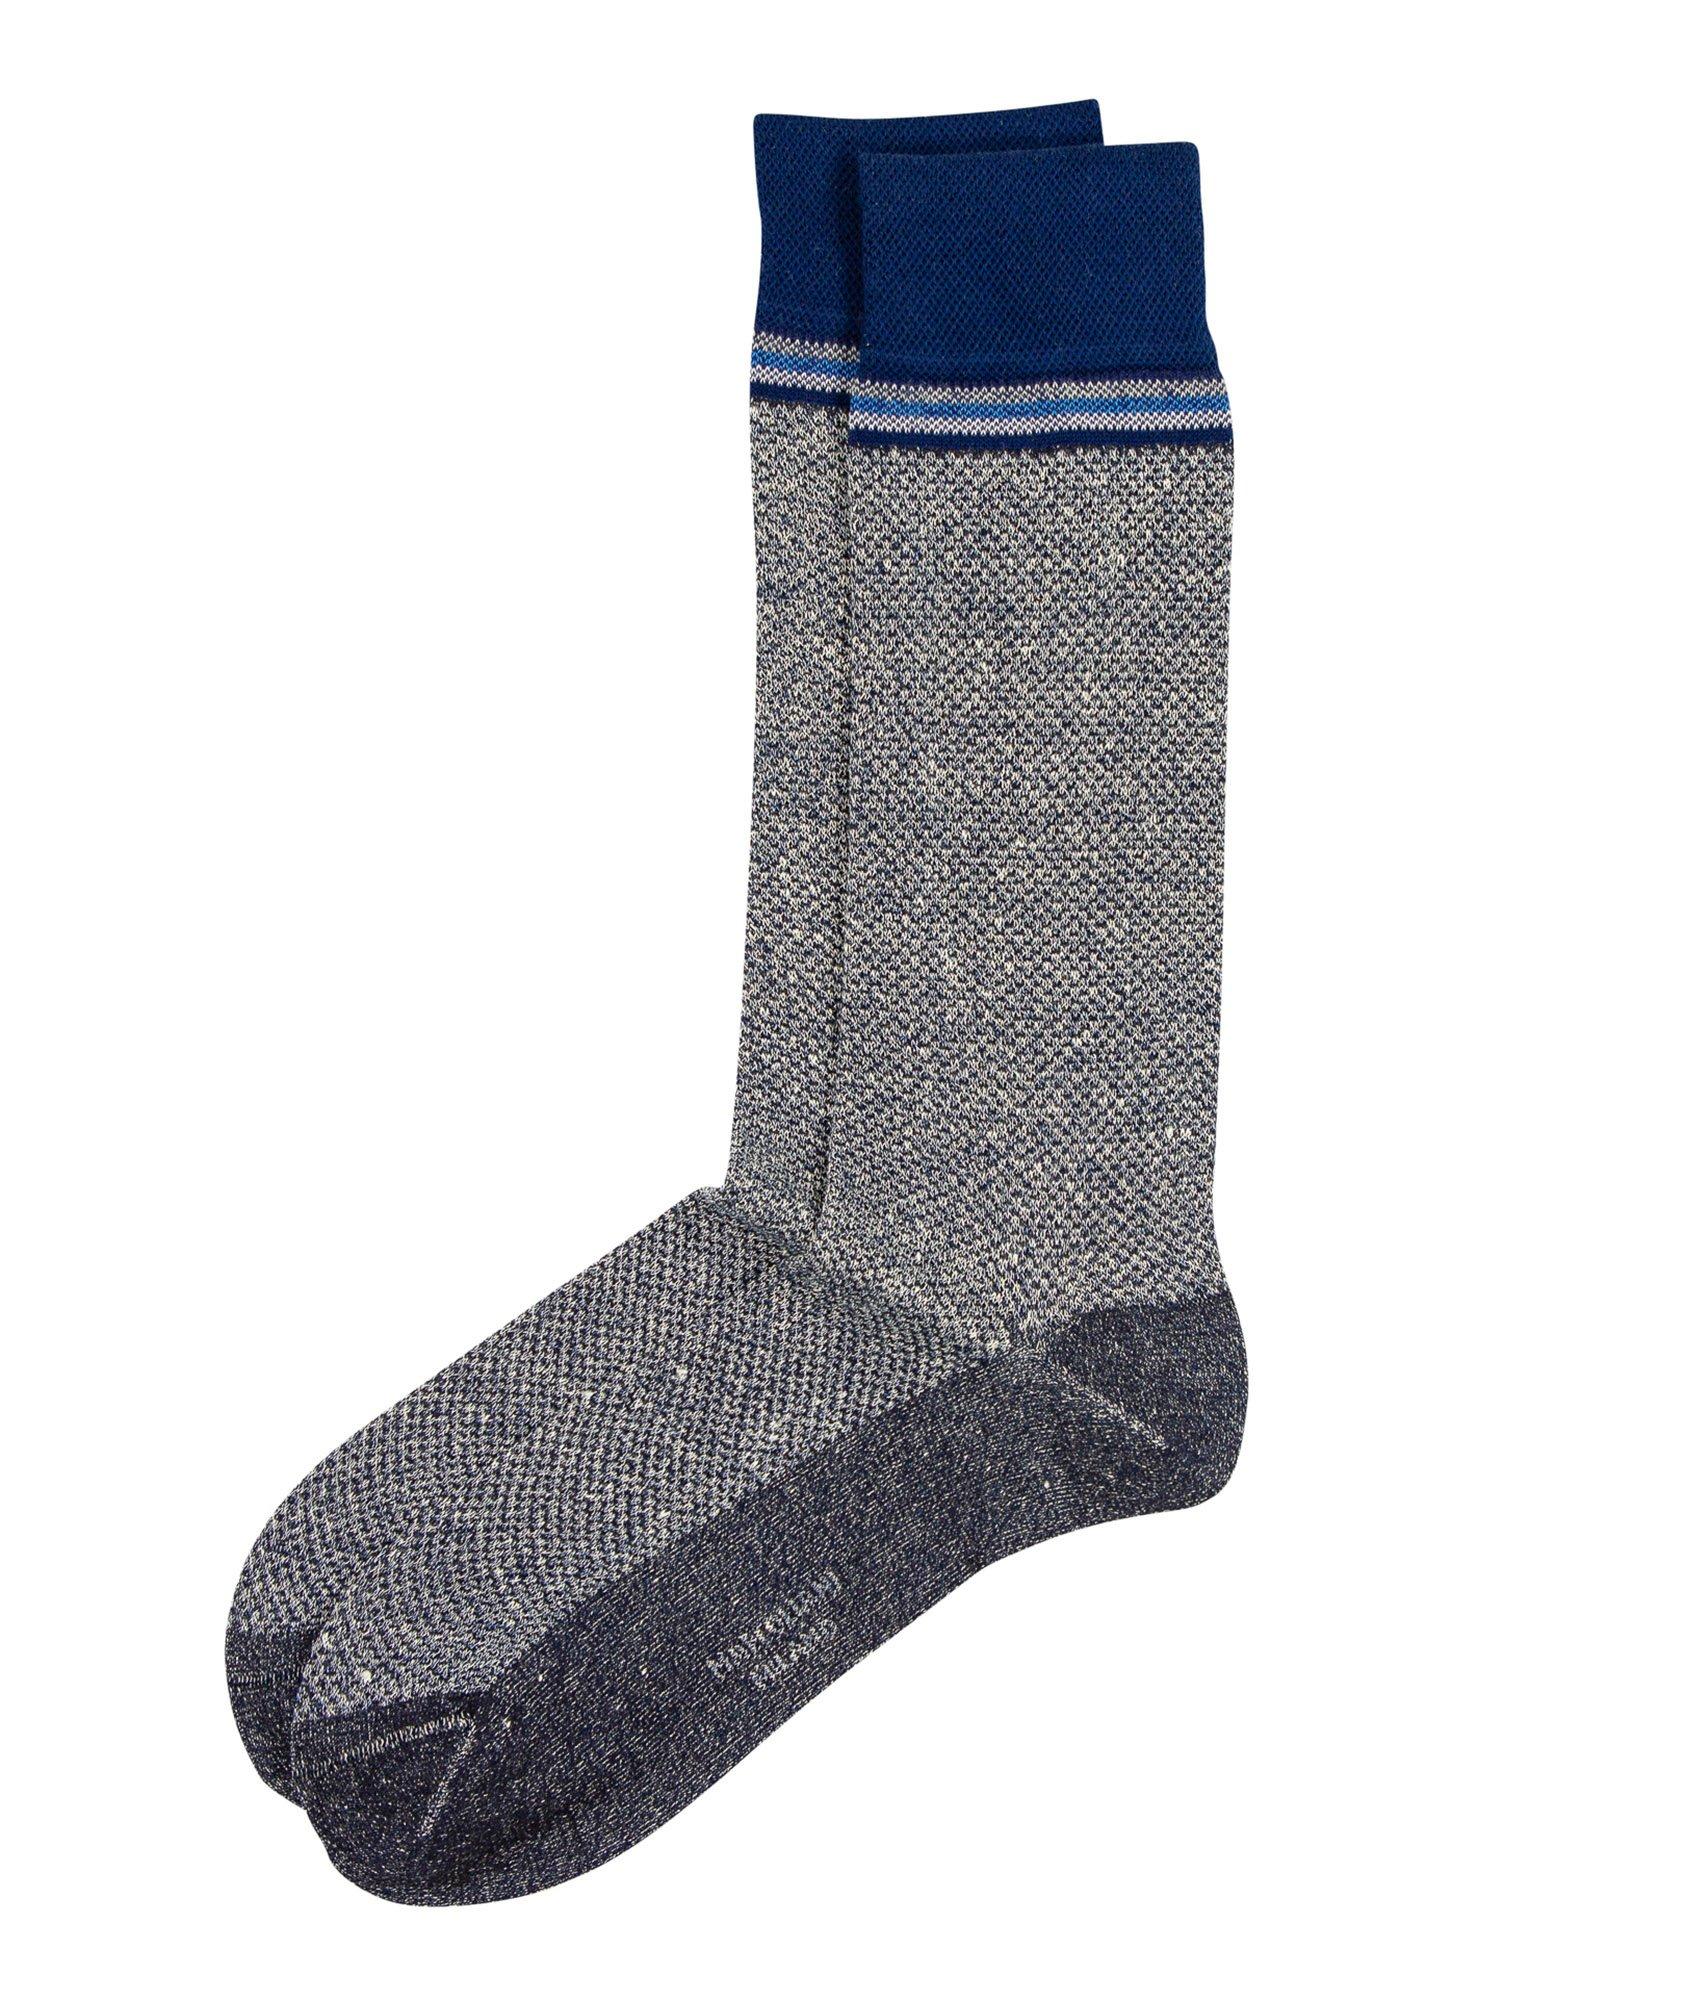 Textured Linen-Cotton Socks image 0